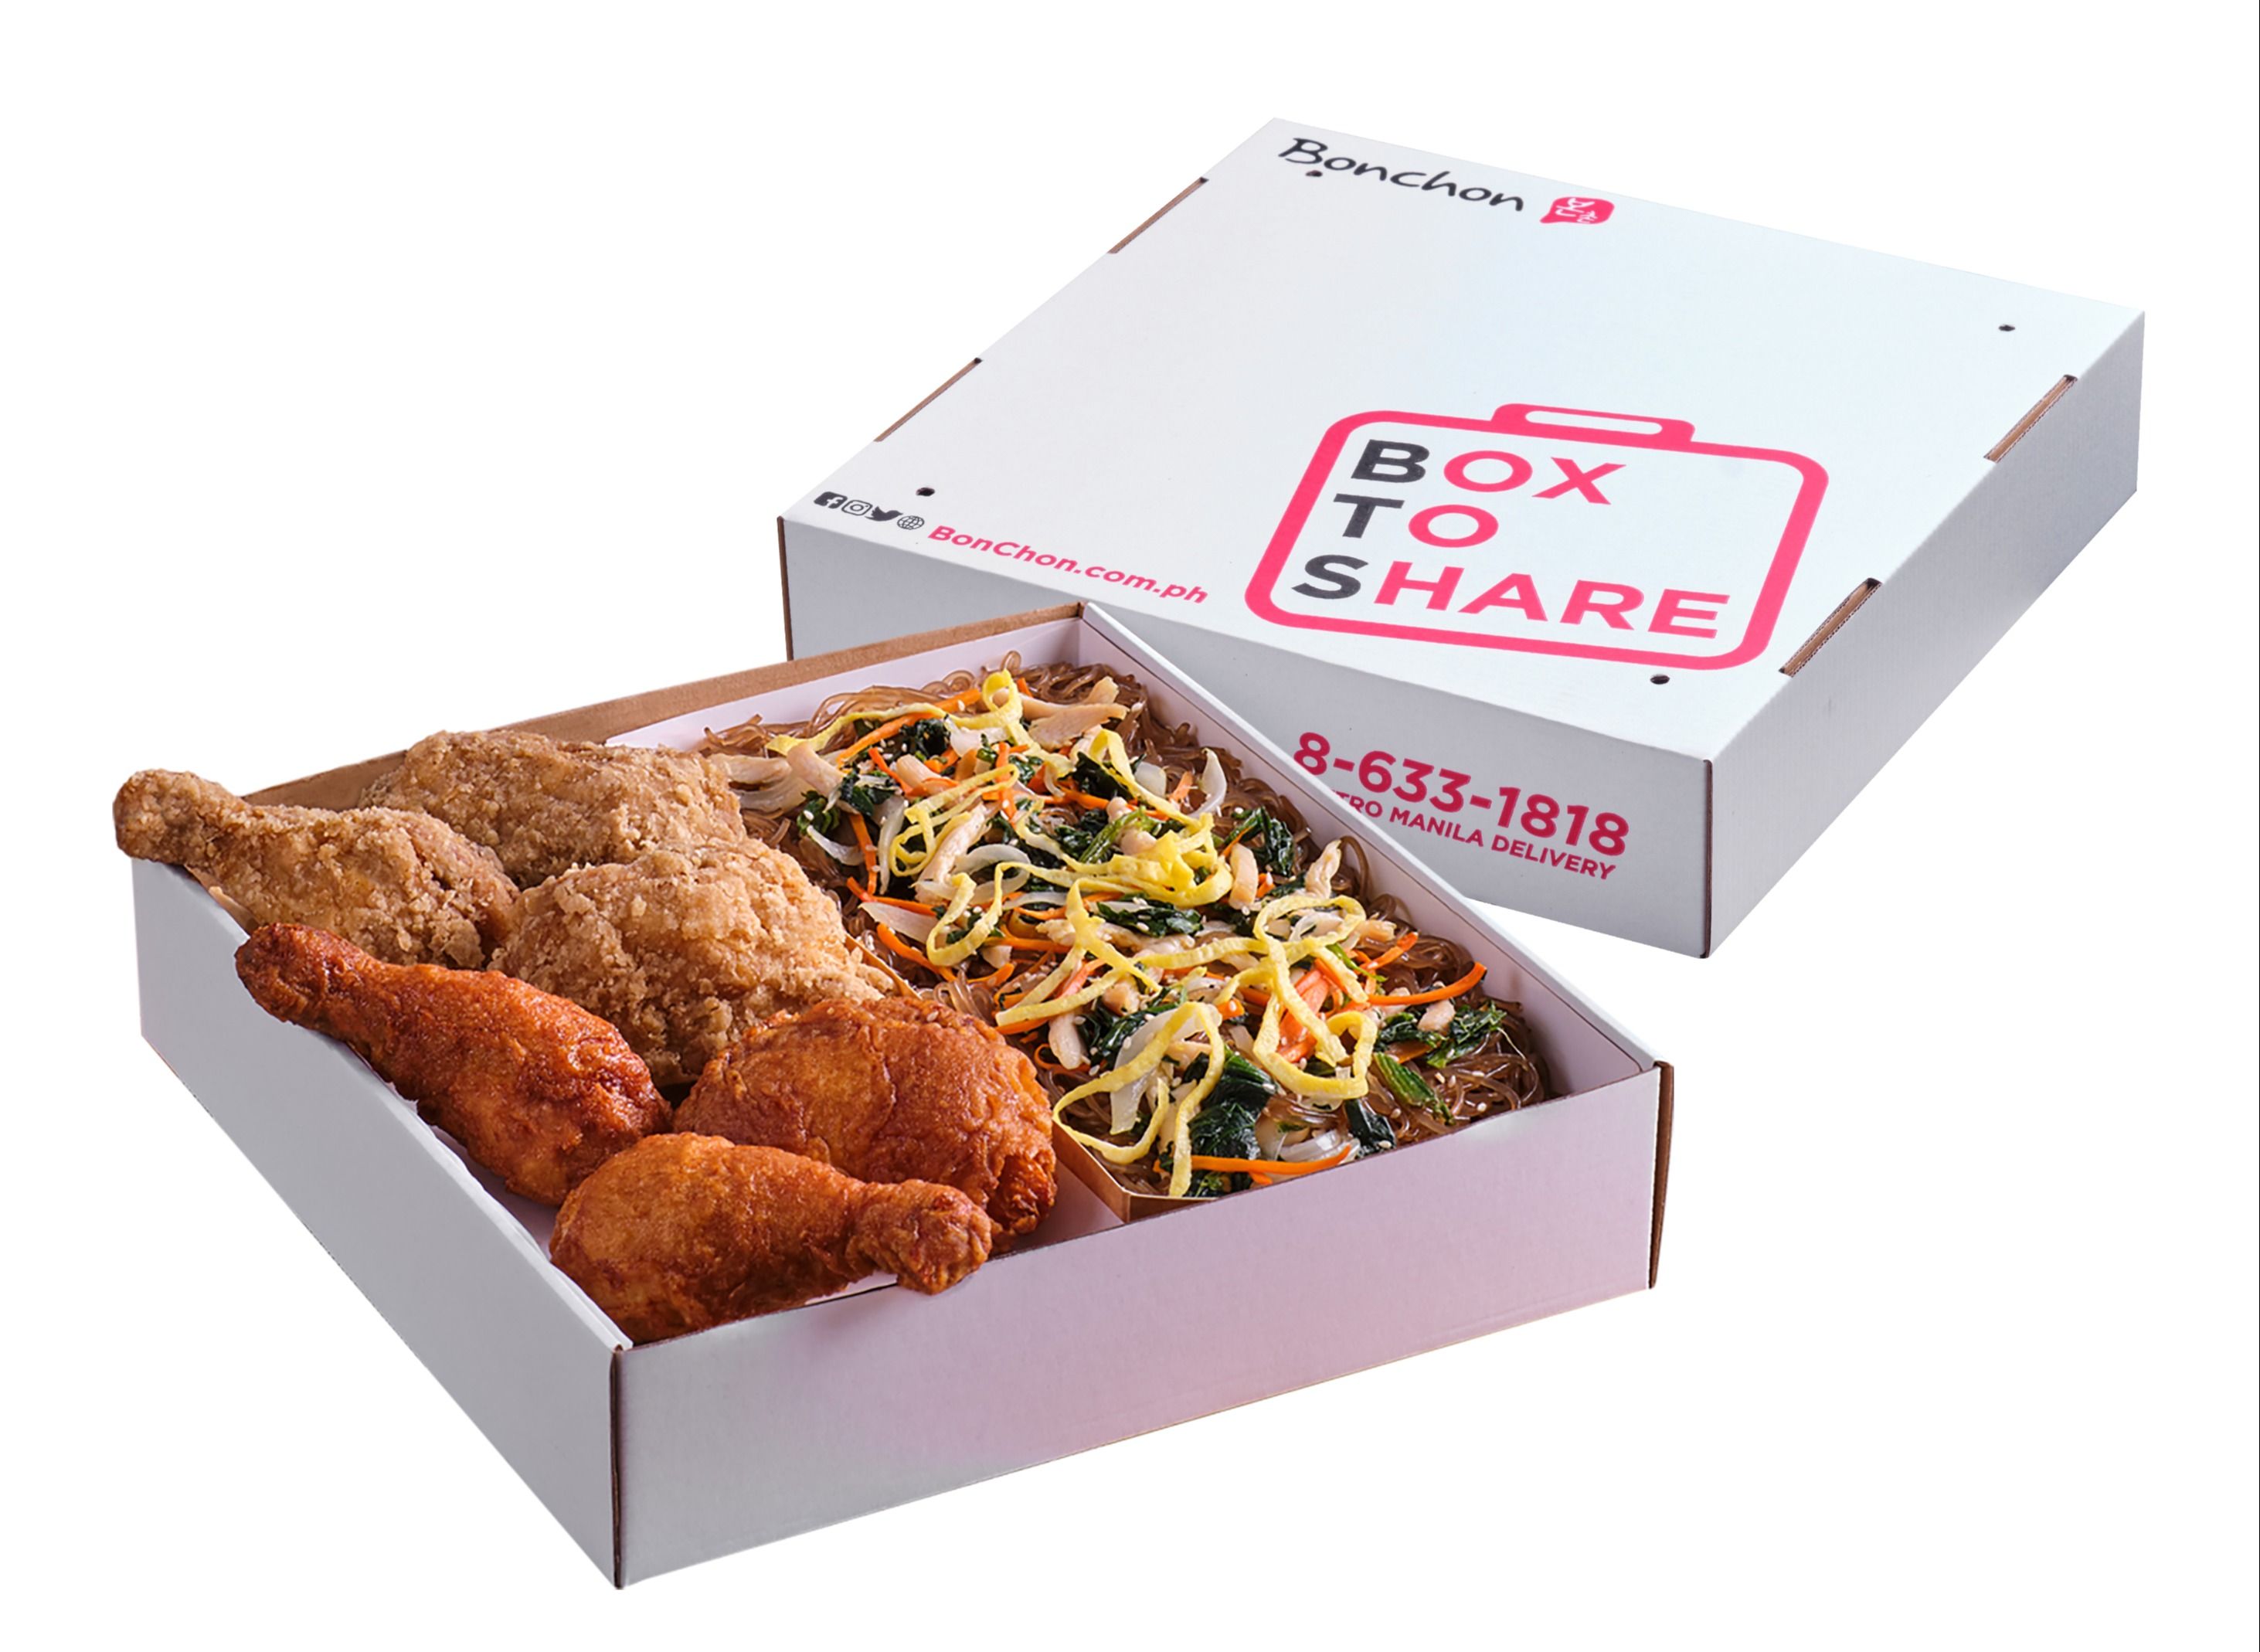 Box to Share